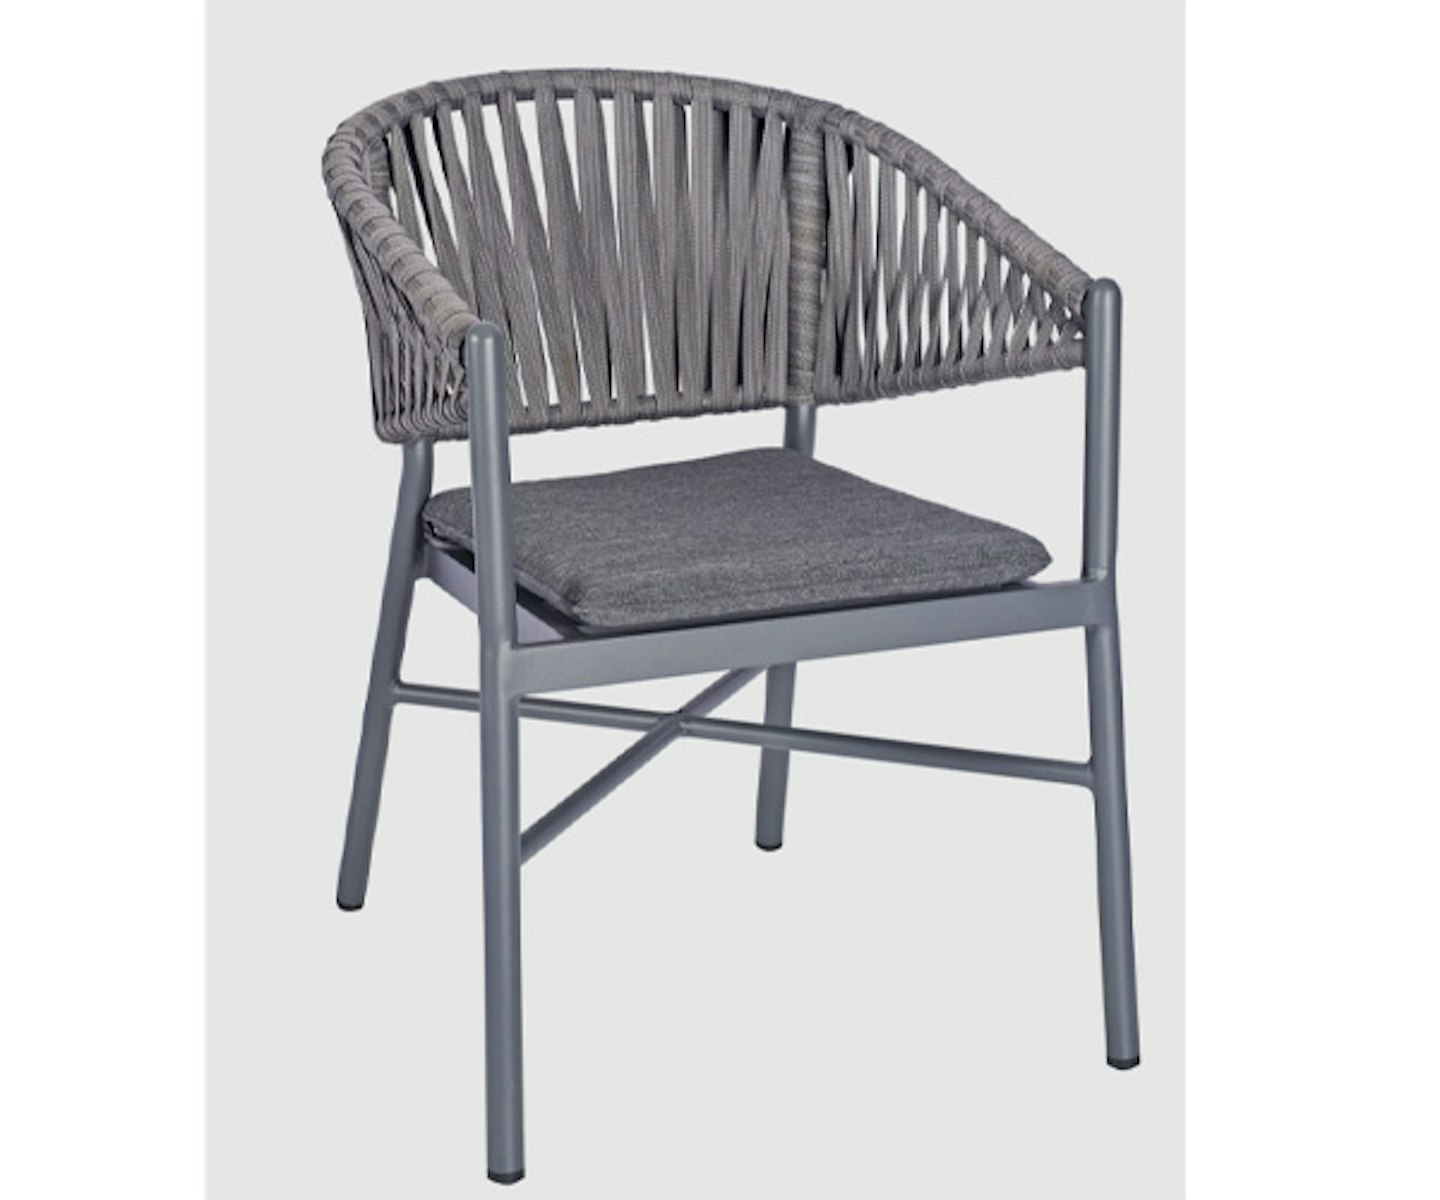 Grey chair